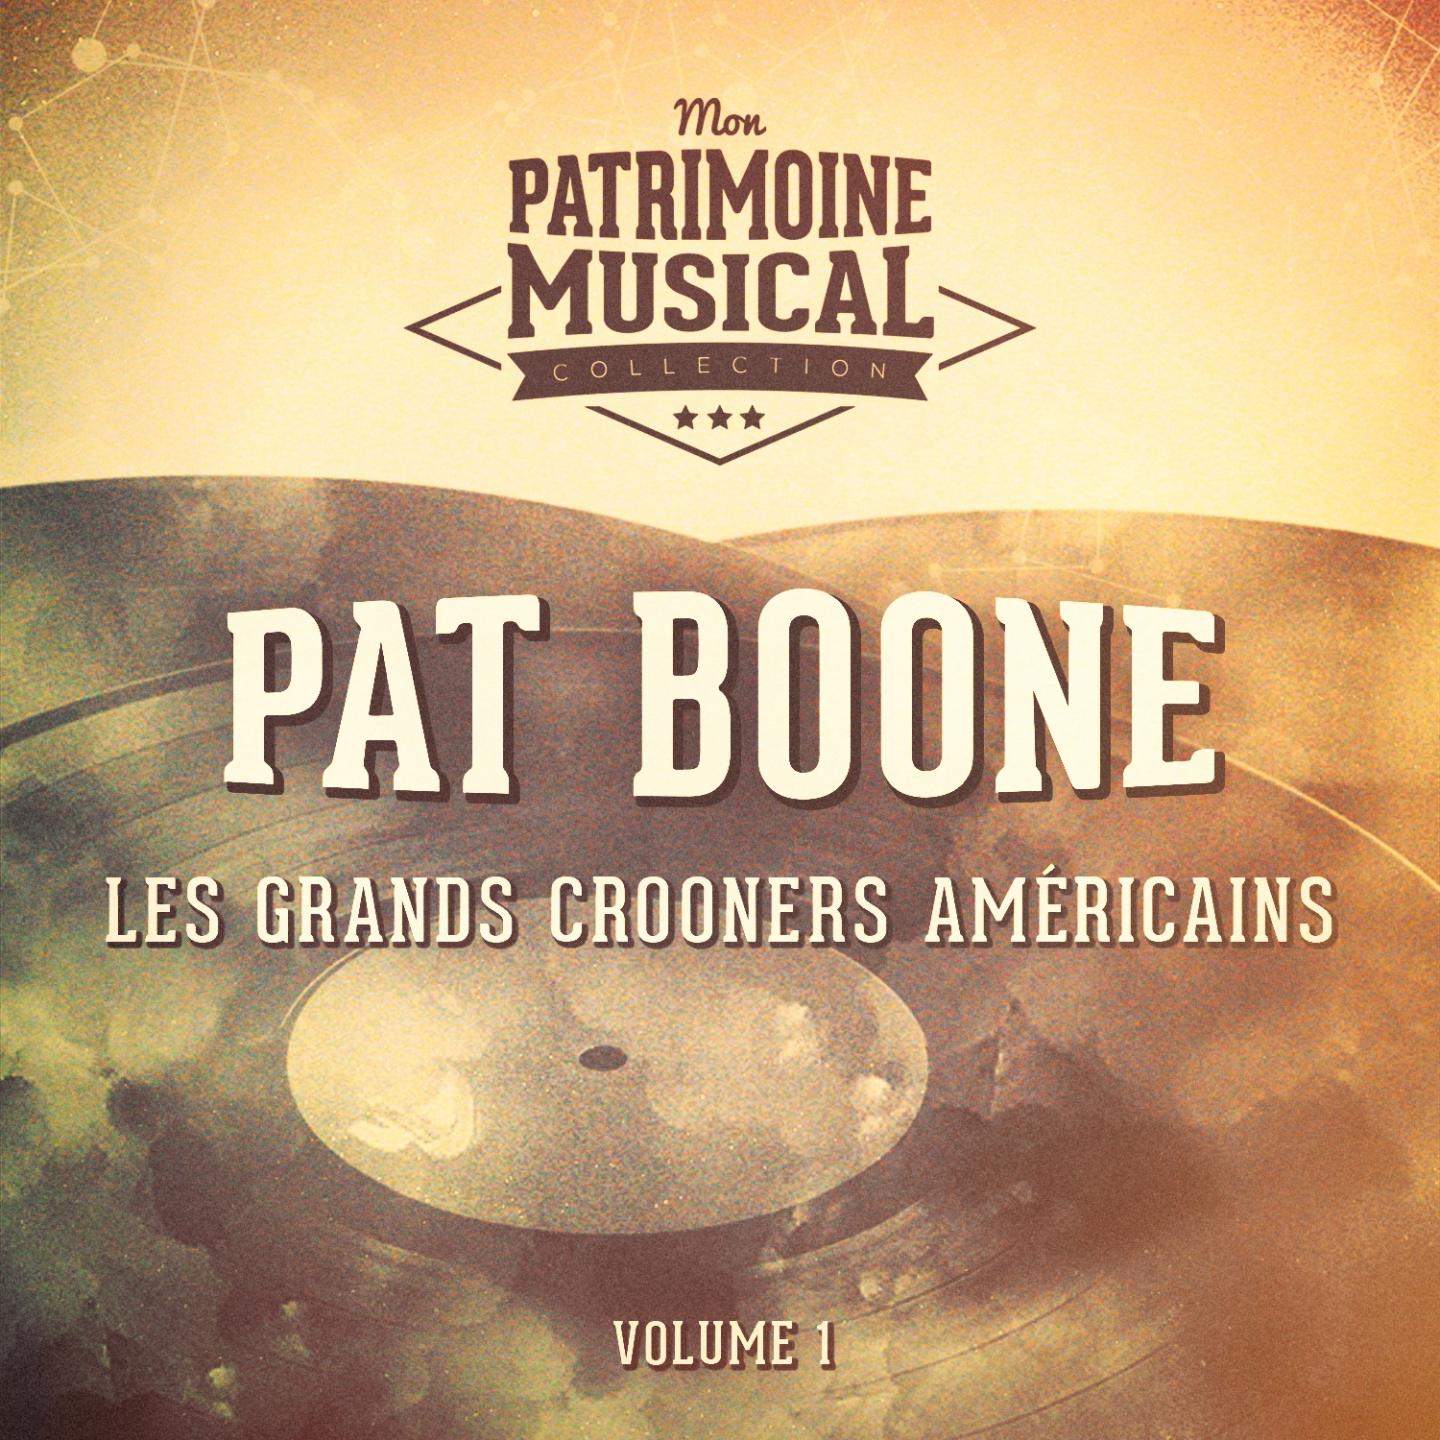 Les grands crooners ame ricains : Pat Boone, Vol. 1